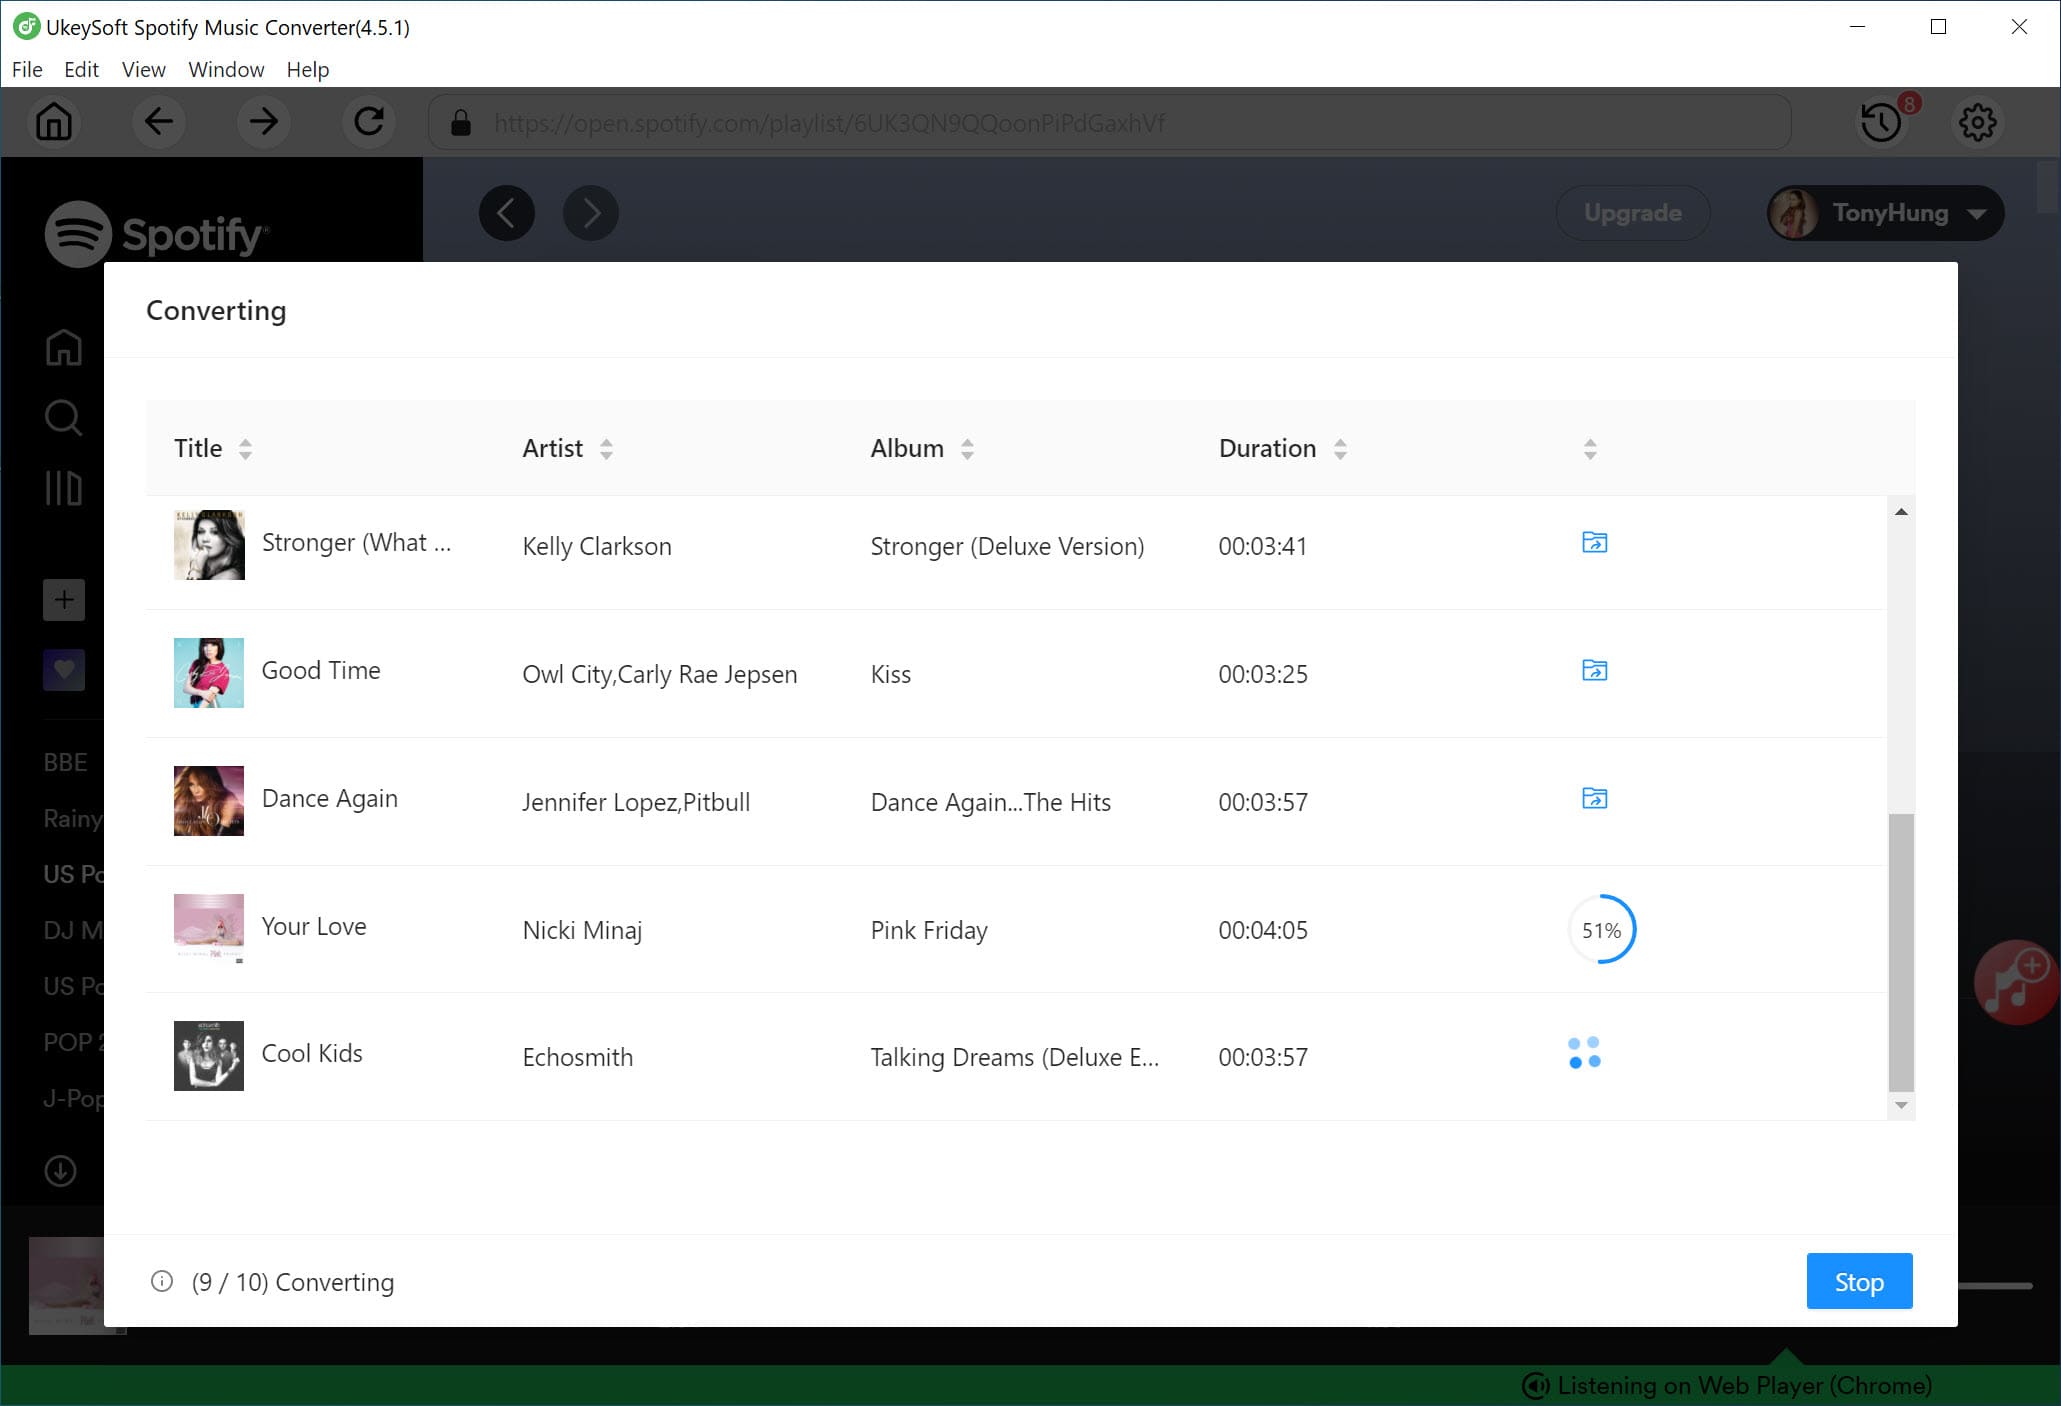 download drm-free Spotify music